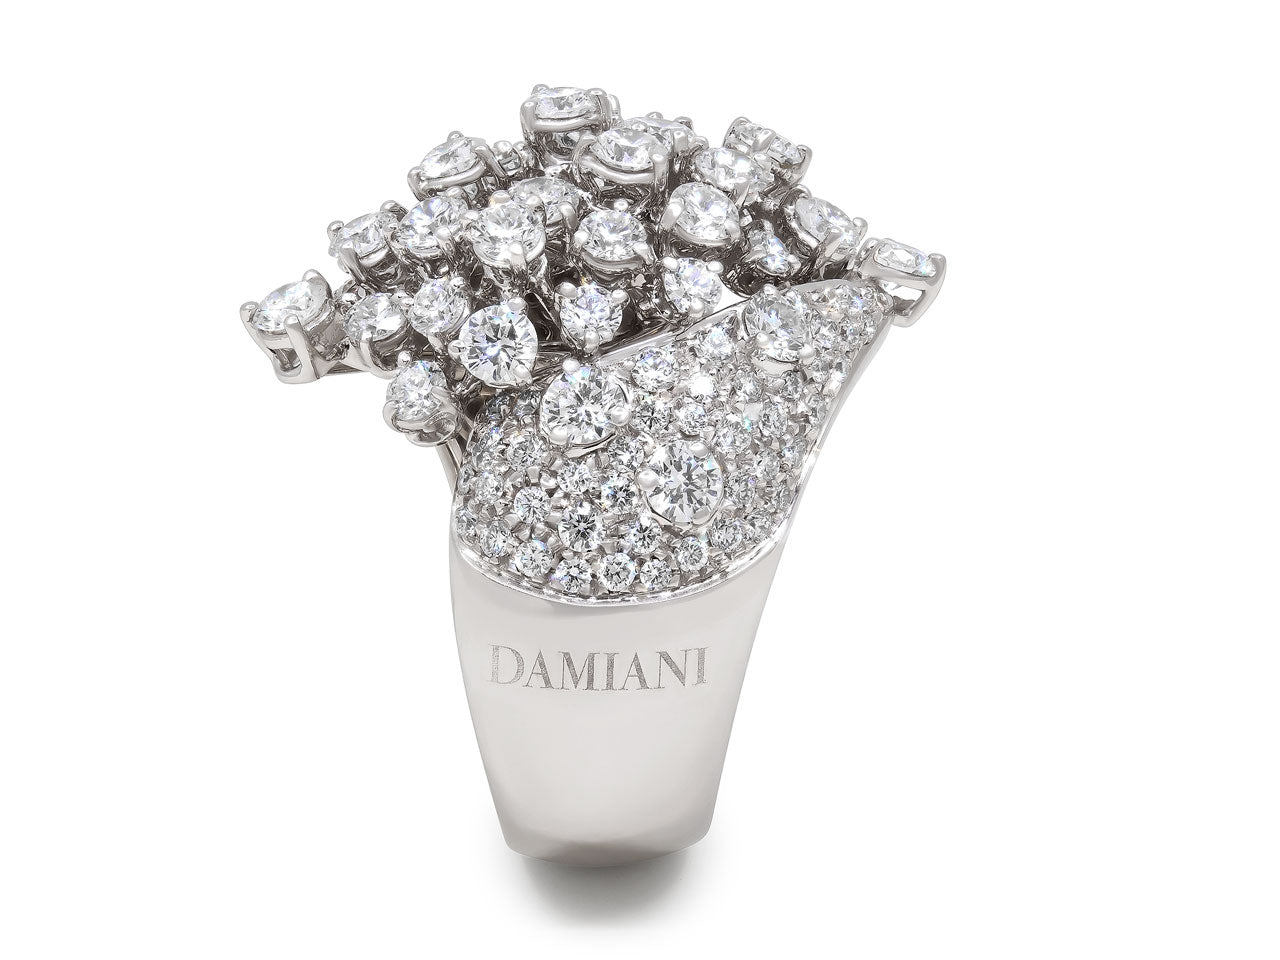 Damiani 'Mimosa' Diamond Cocktail Ring in 18K White Gold